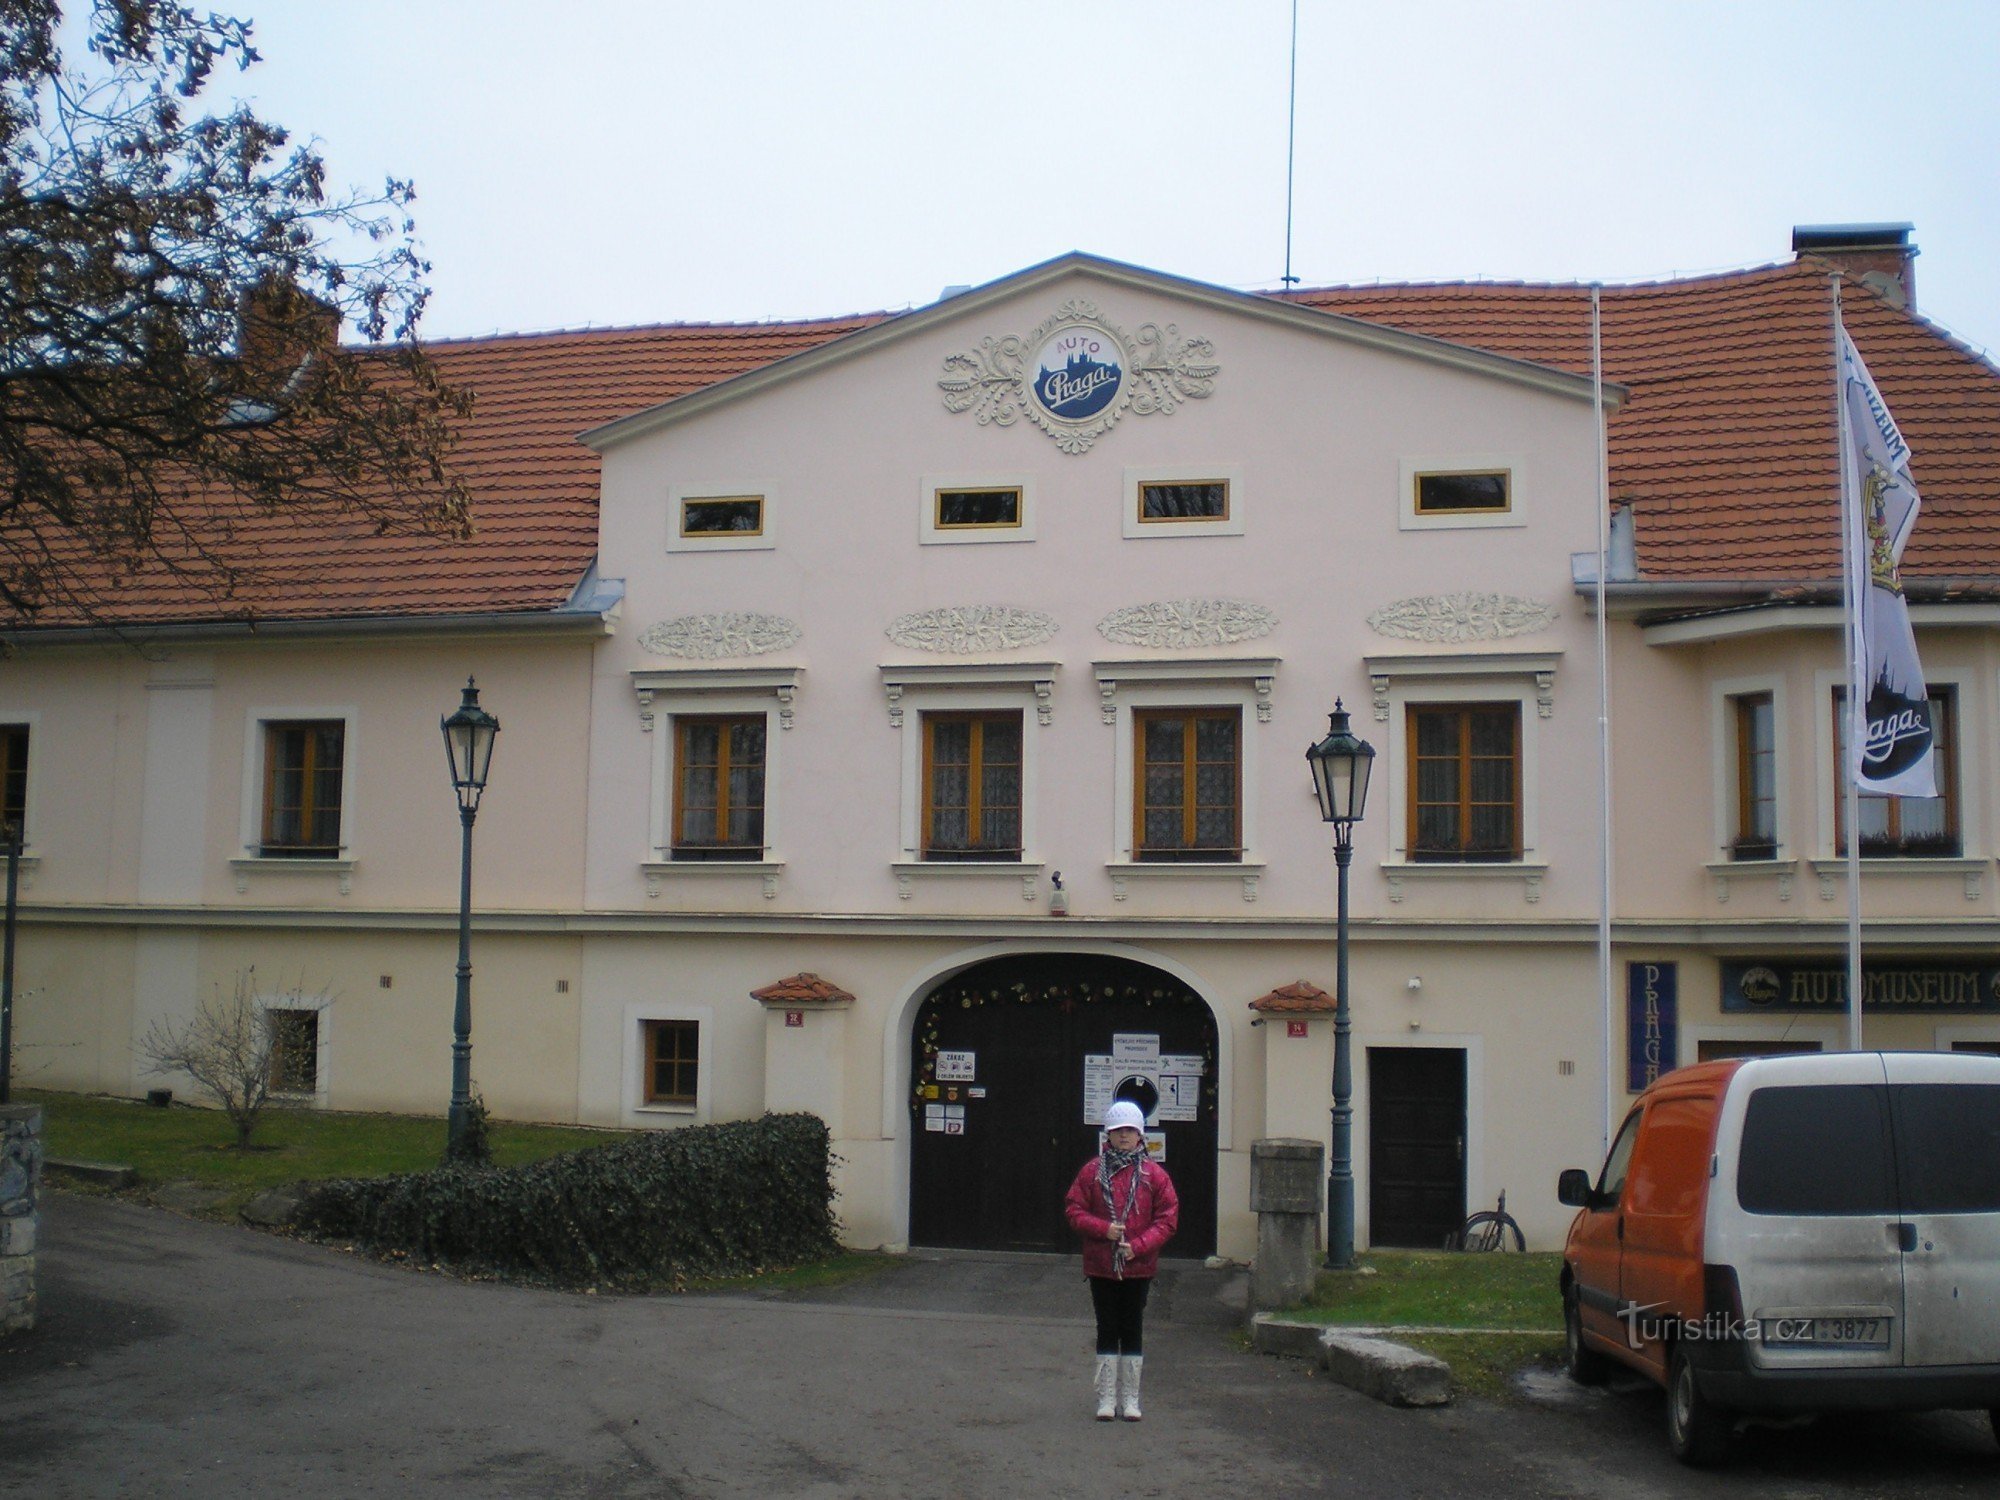 Prague Auto Museum